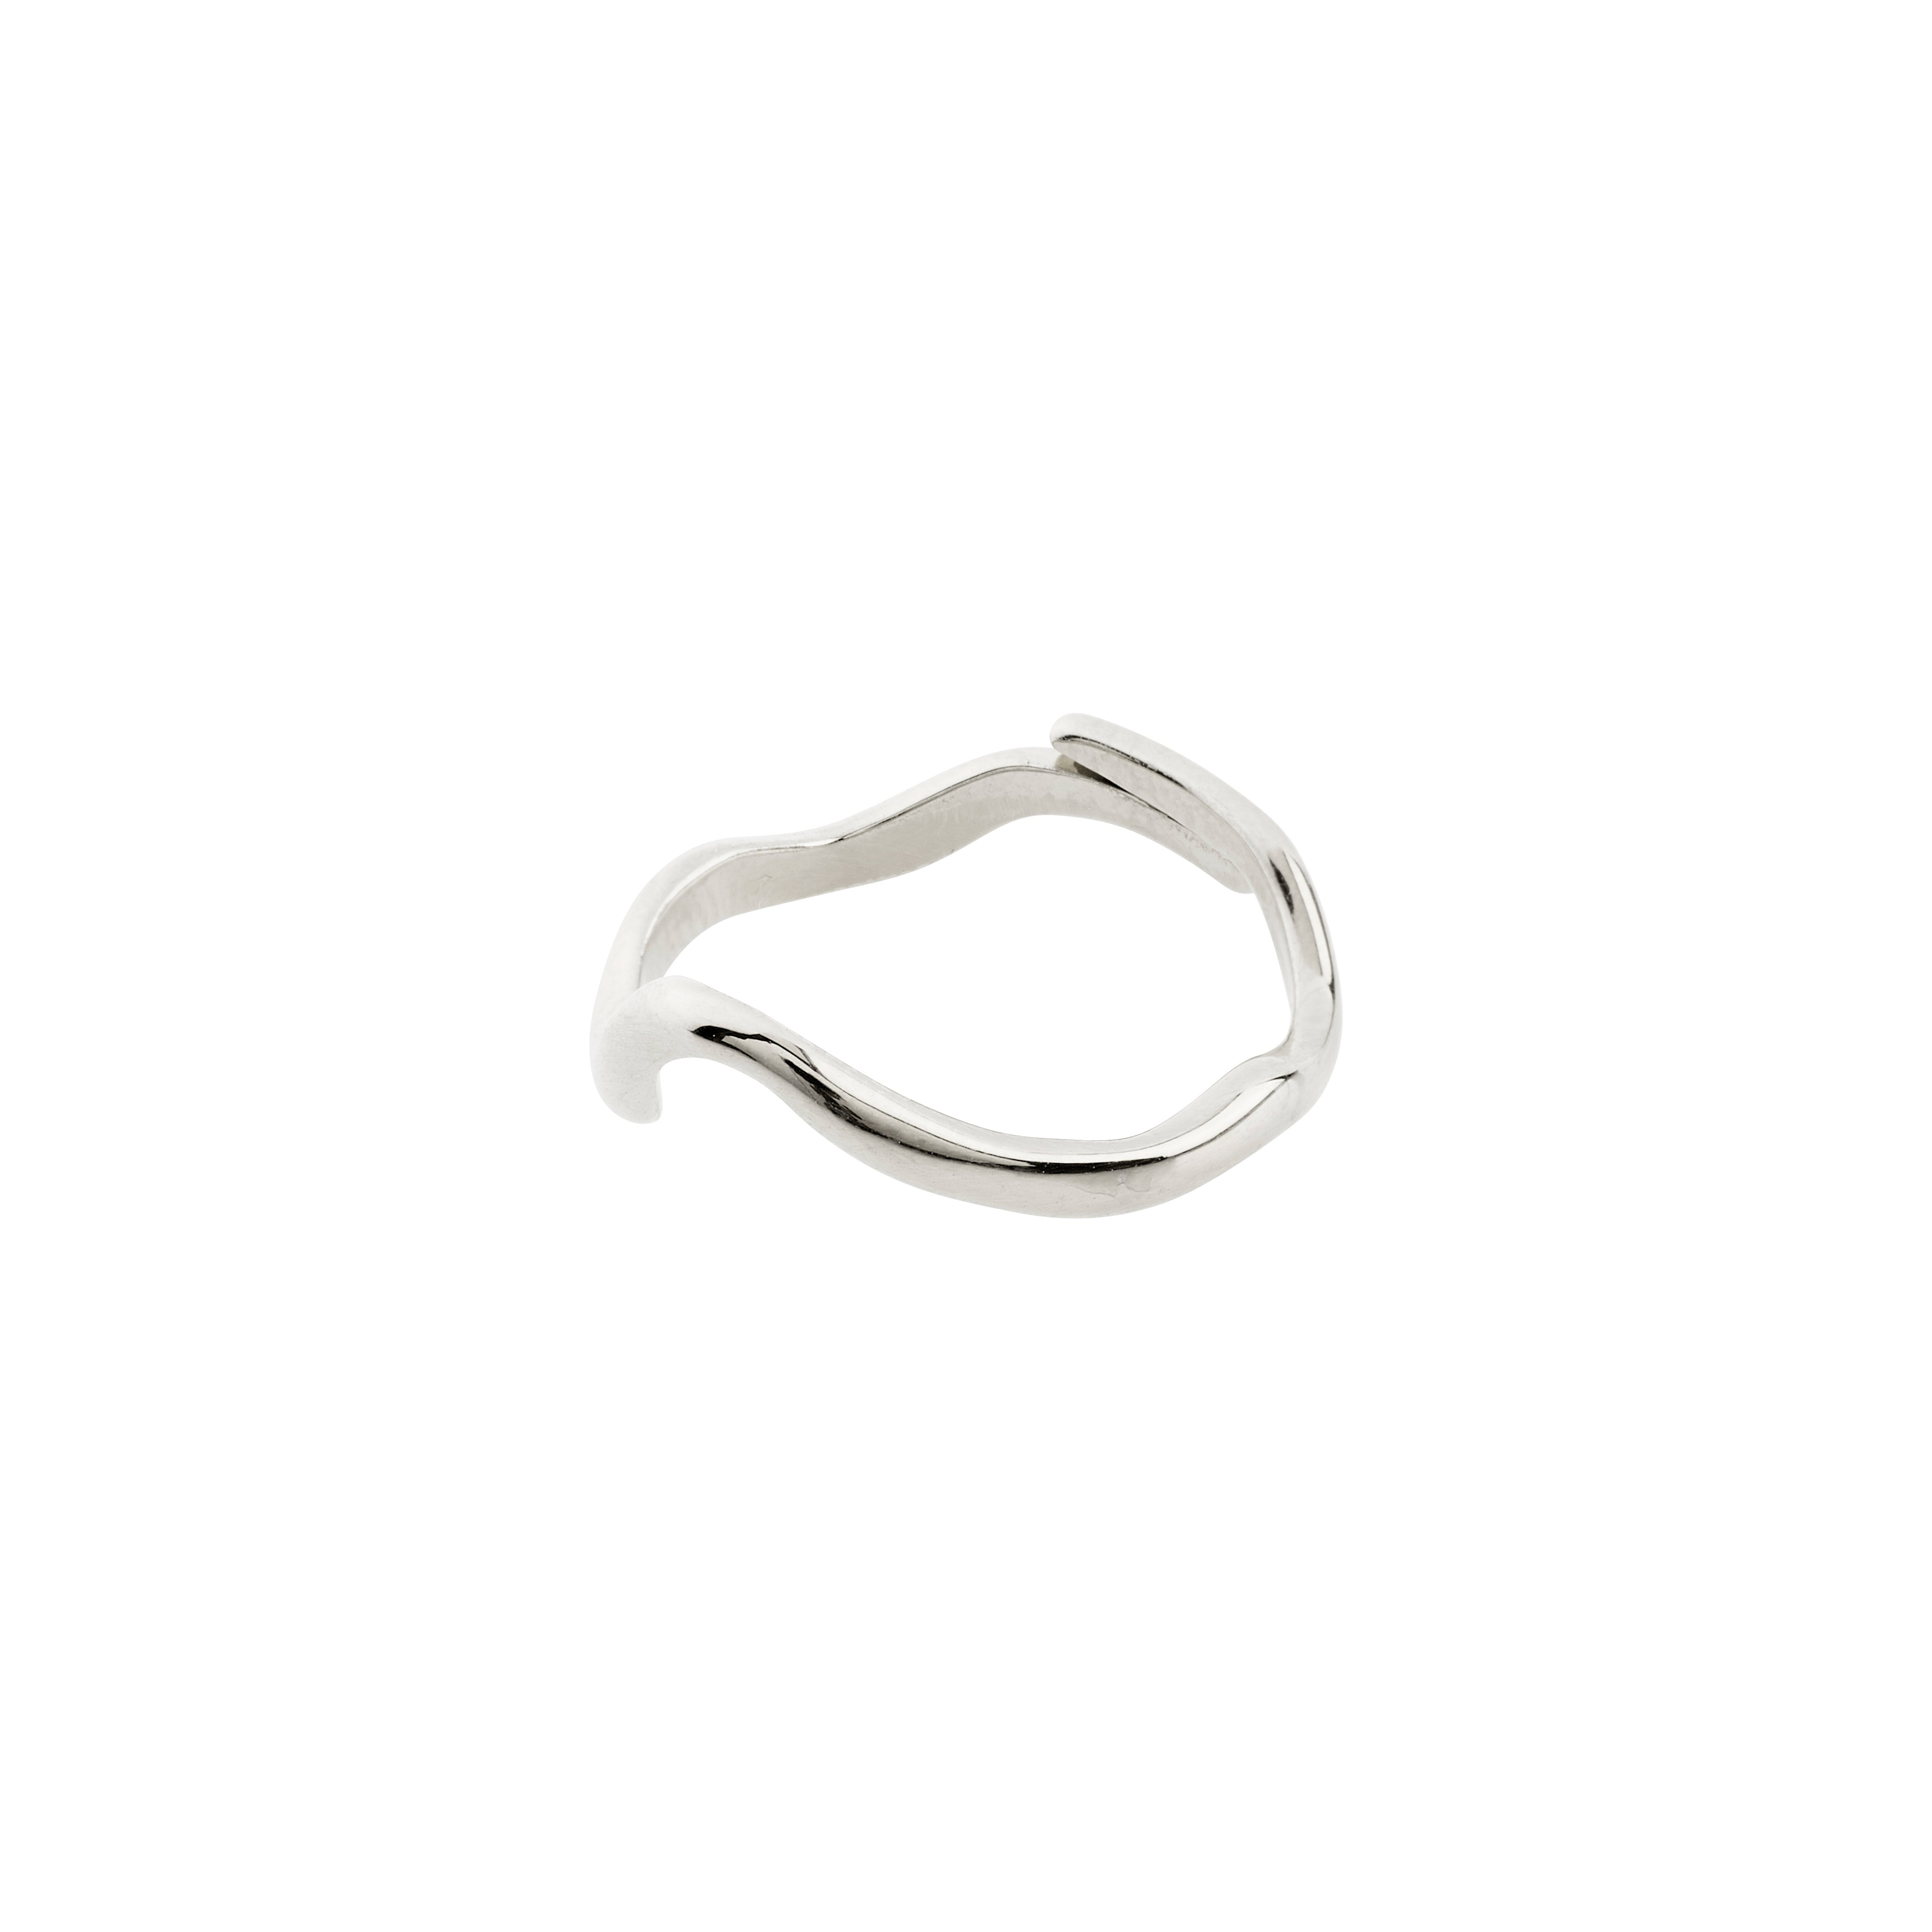 ALBERTE organic shape ring silver-plated